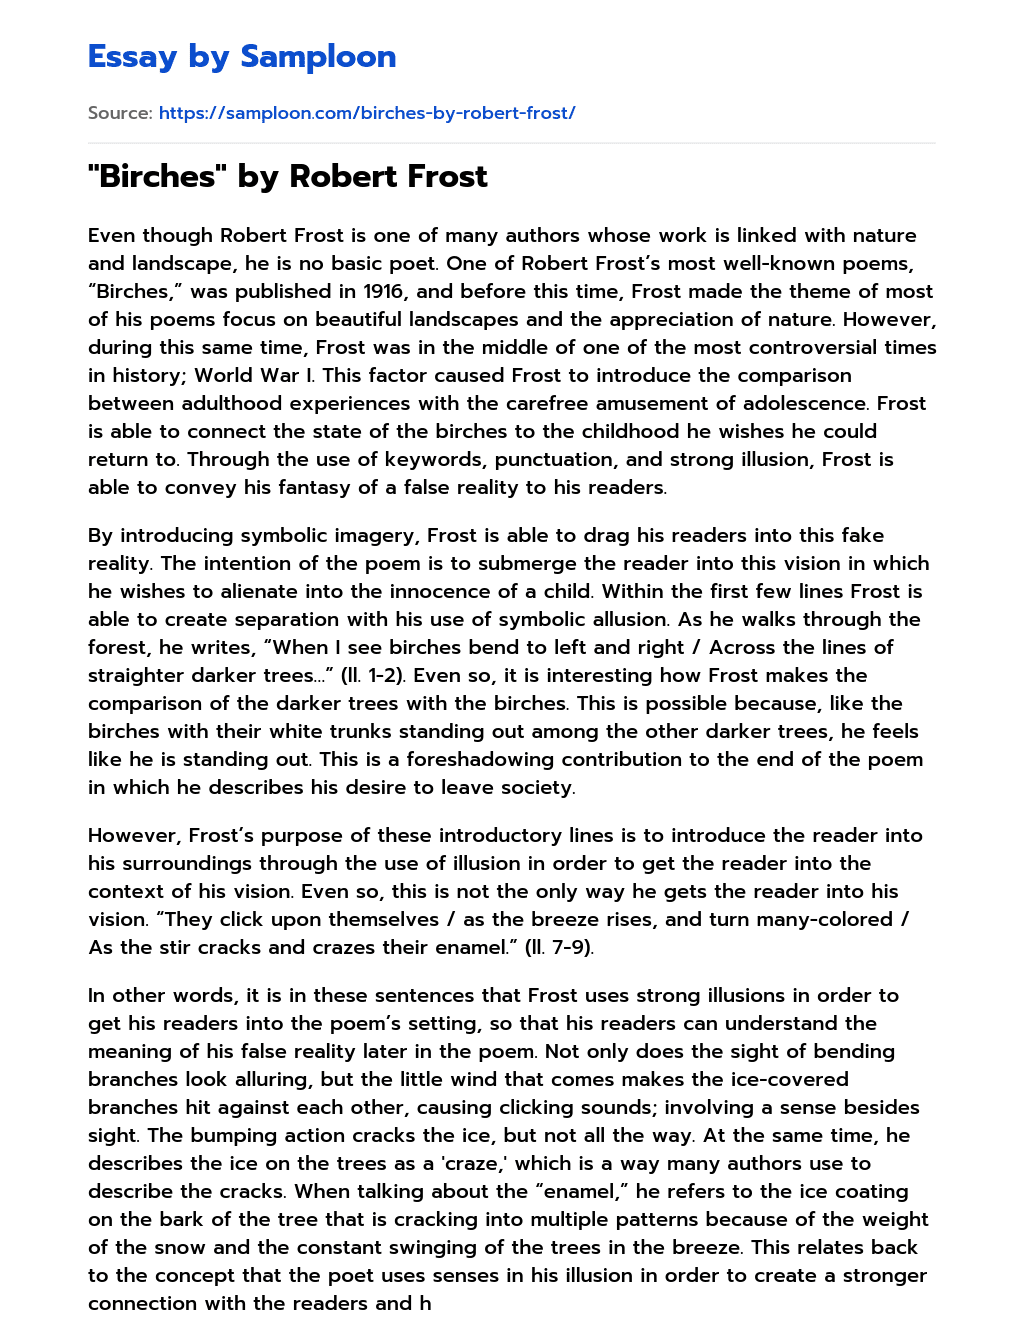 “Birches” by Robert Frost essay